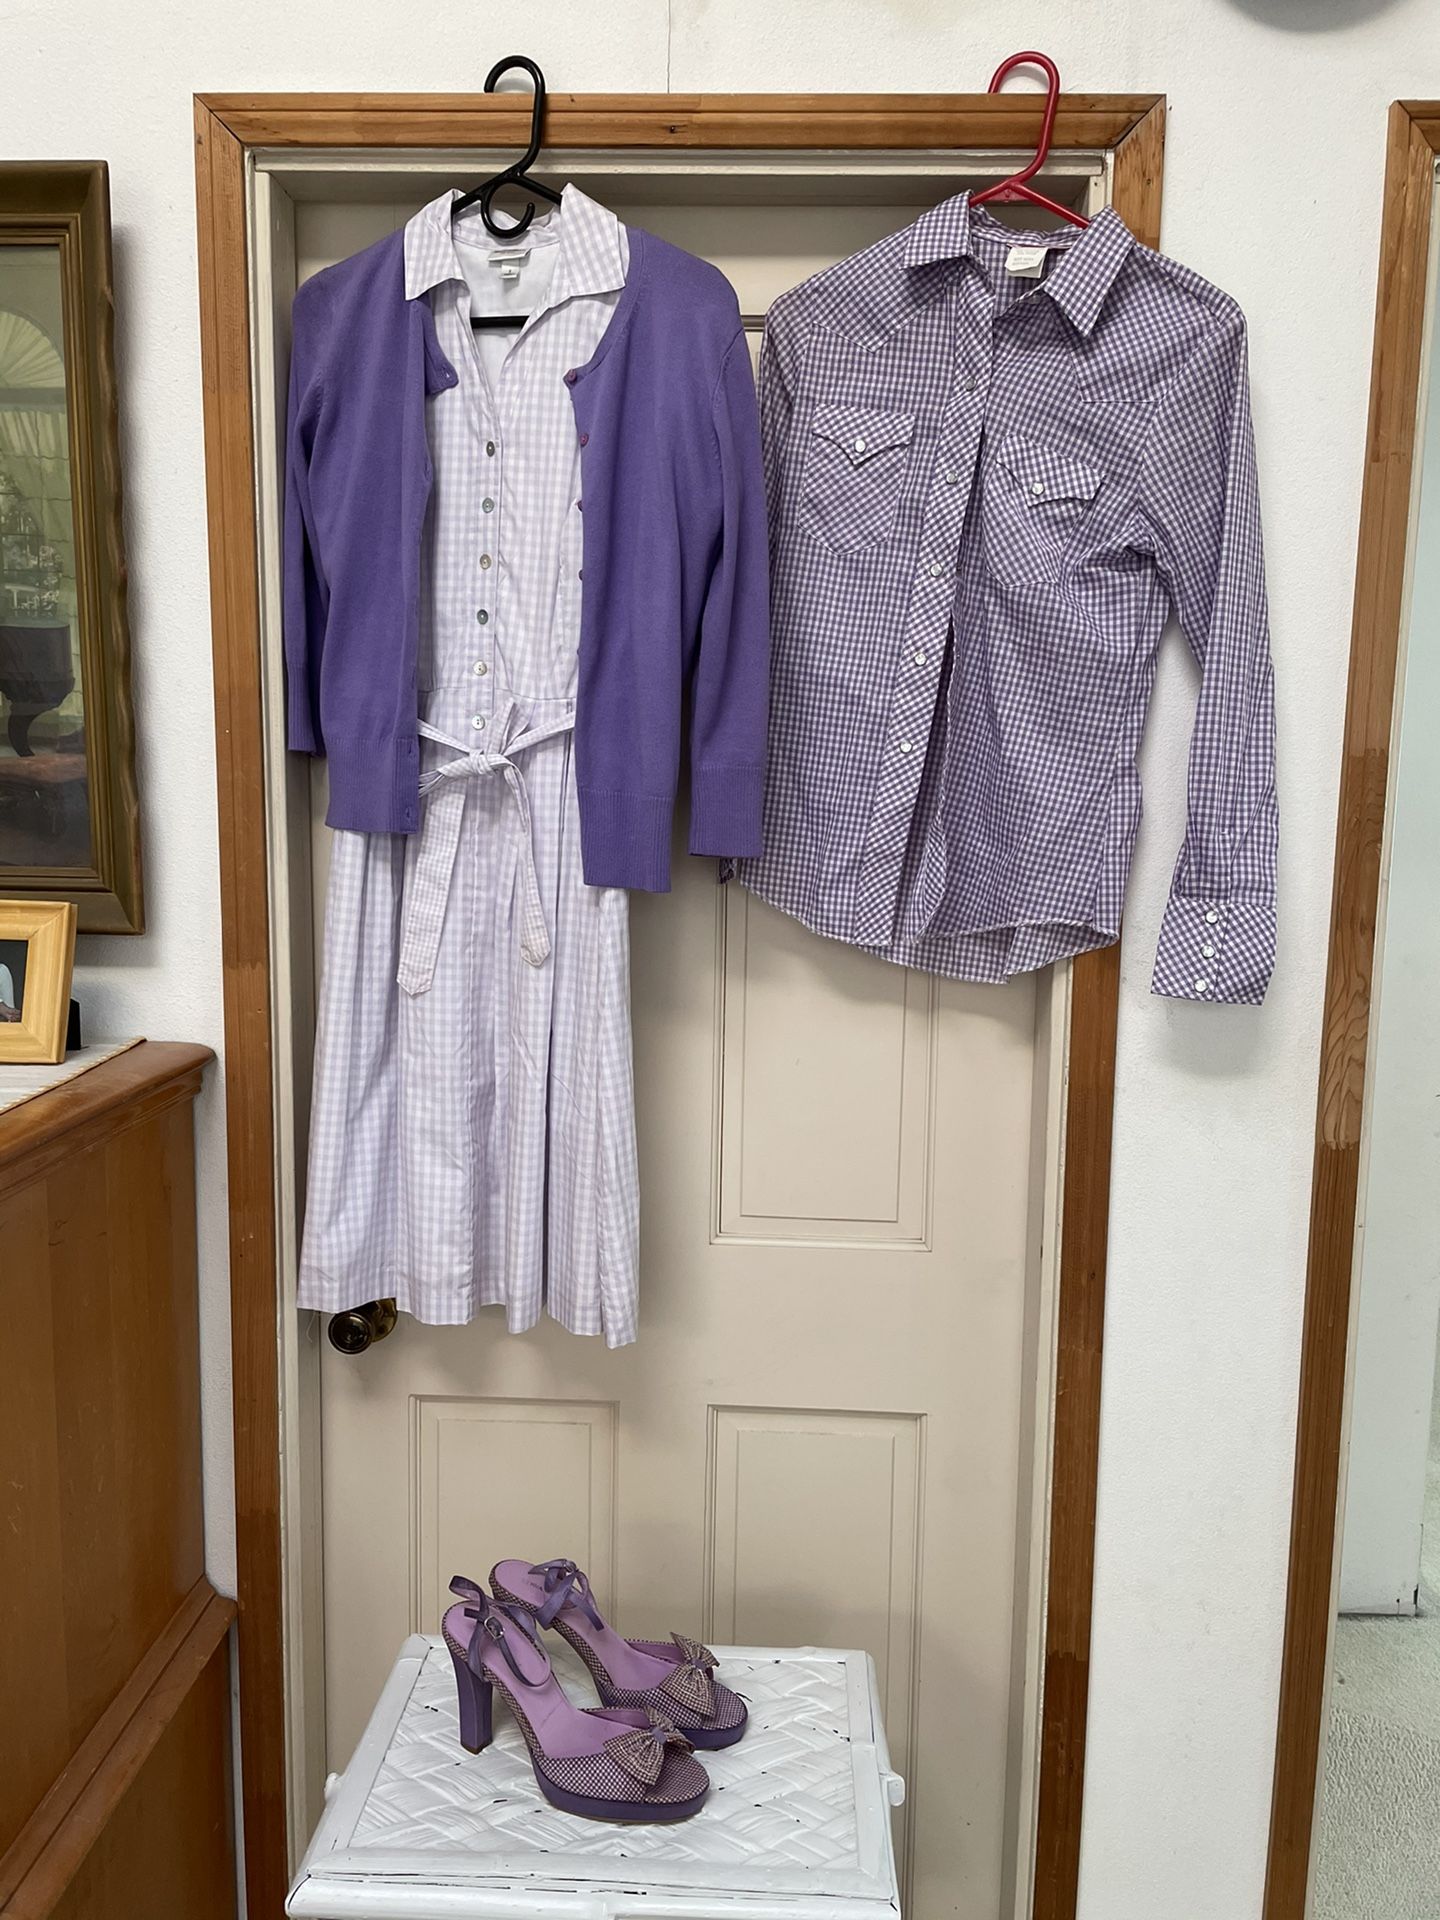 Women’s 1950s Vintage Style Rockabilly Pinup Girl Lilac Purple Dress, Cowboy Shirt, Sweater, & Heels. Size: Small Waist: 28”